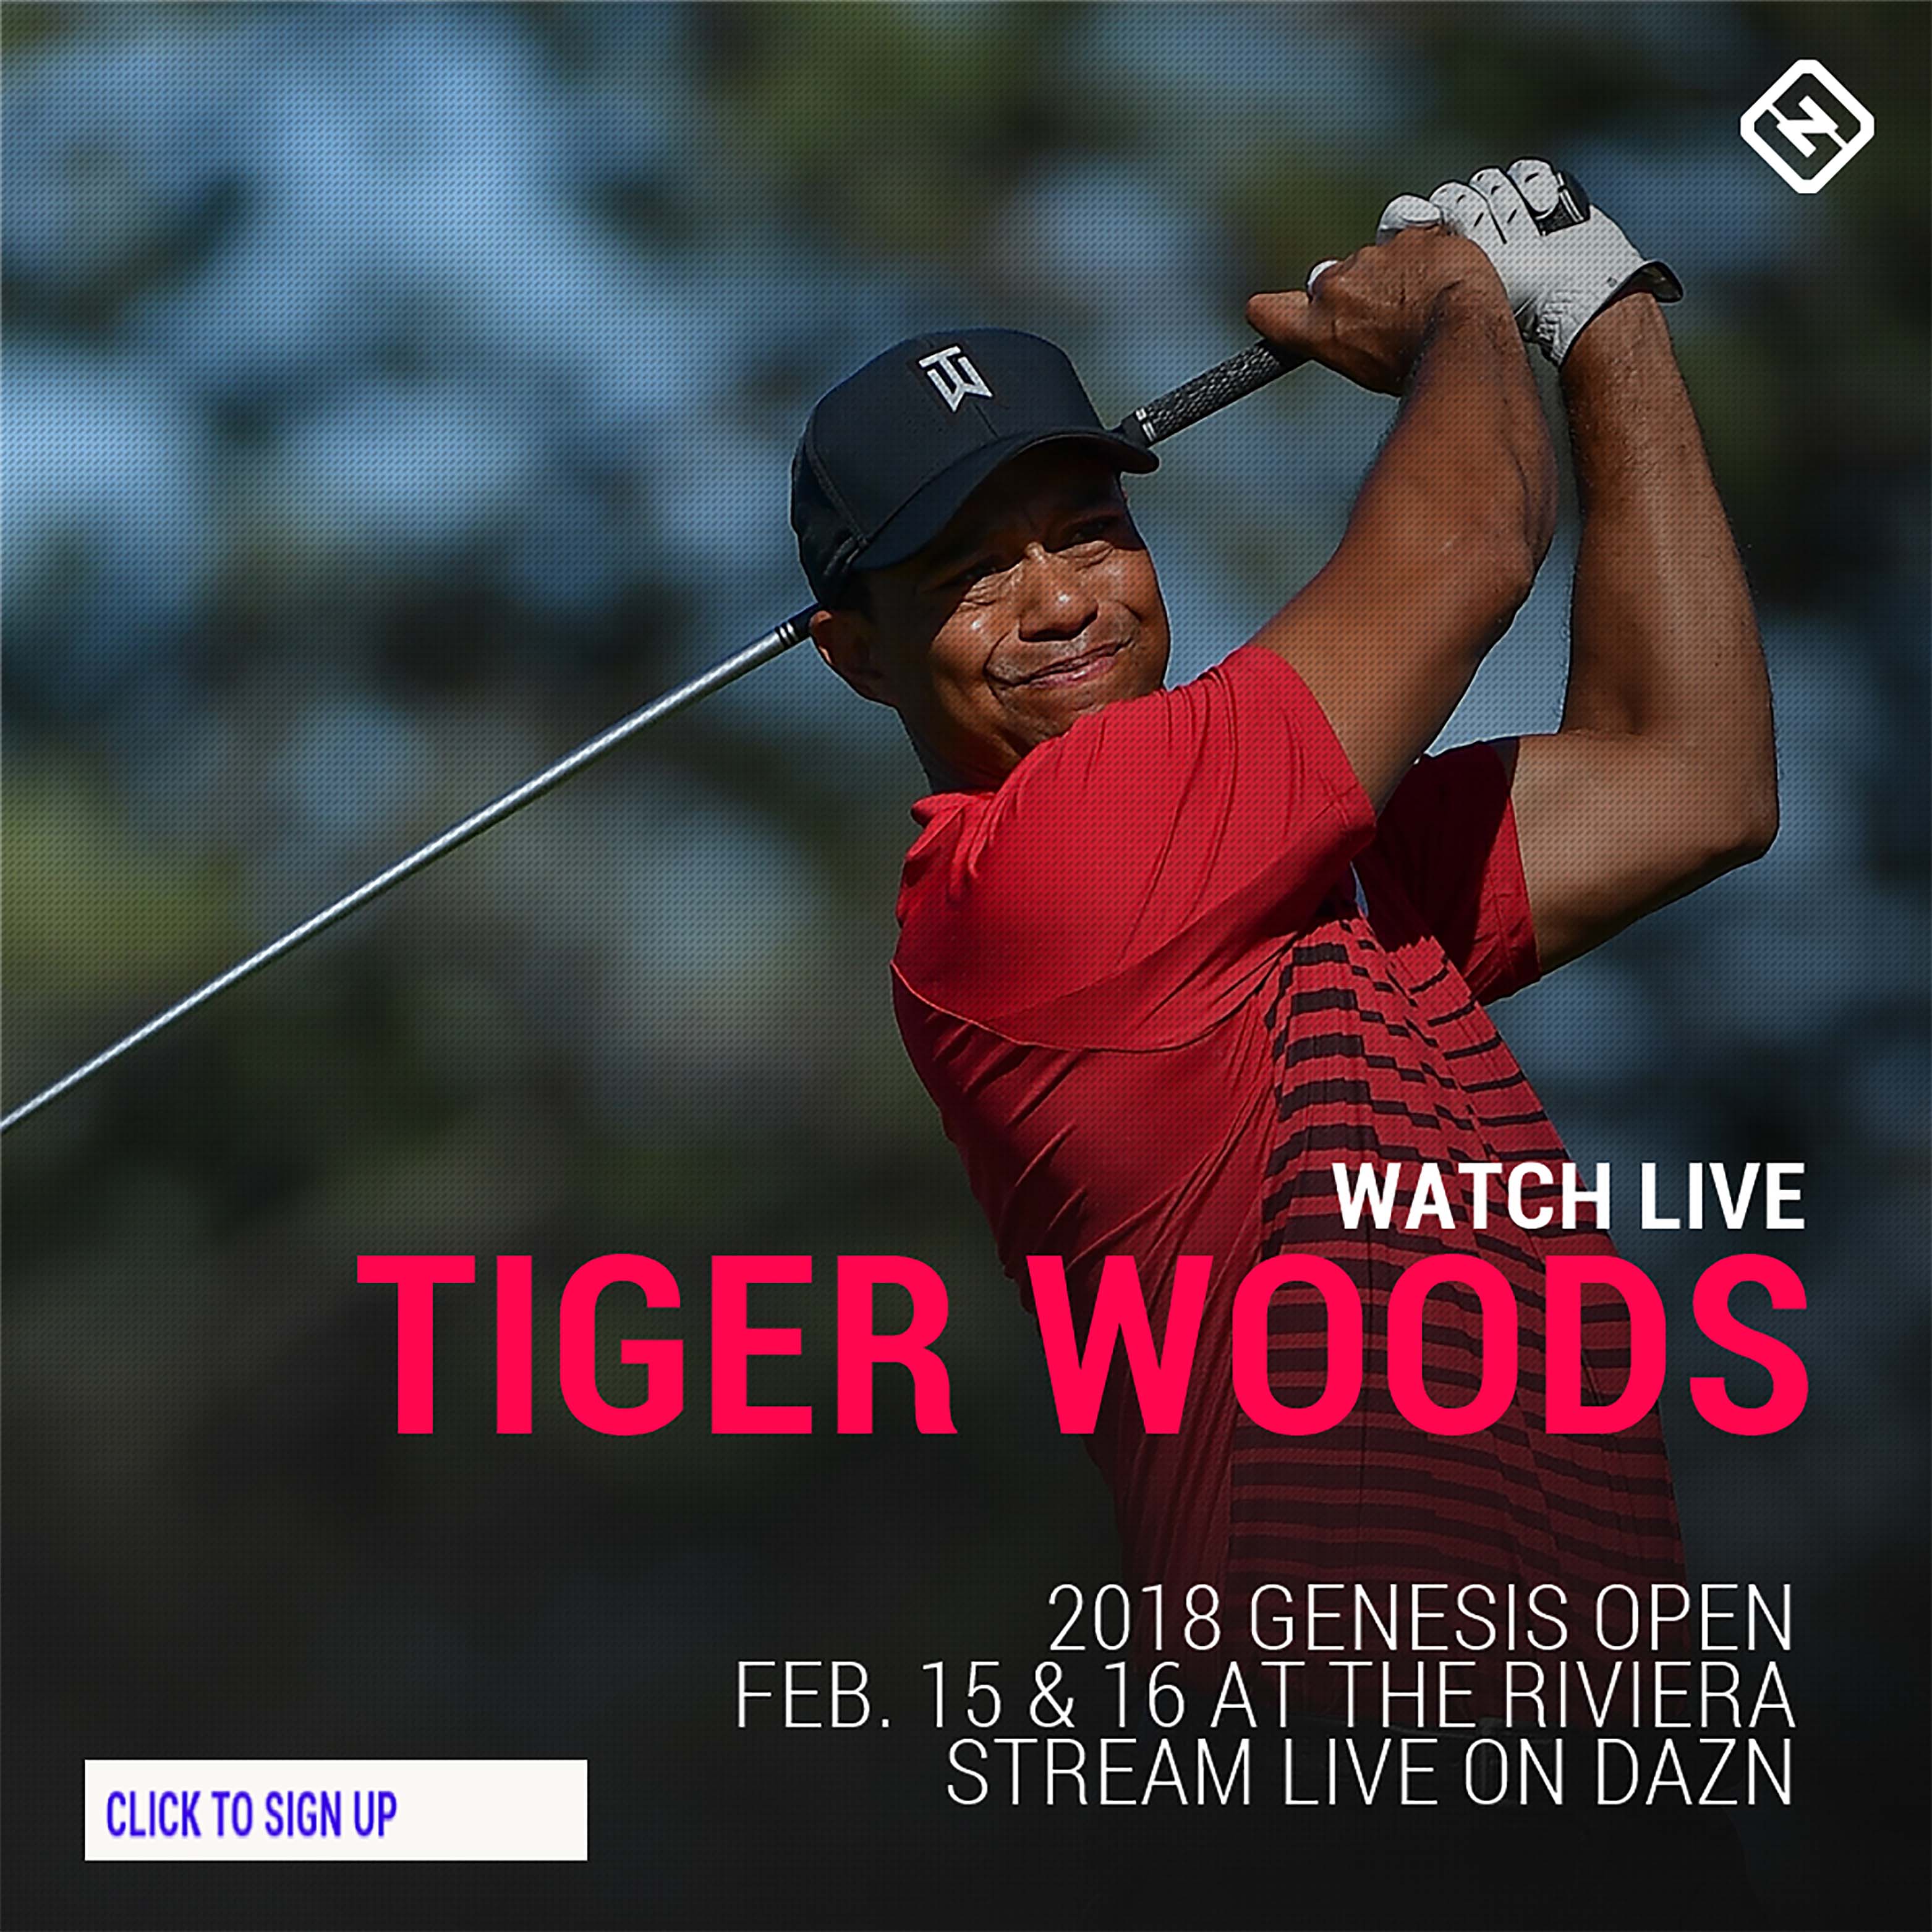 Tiger Woods promo graphic